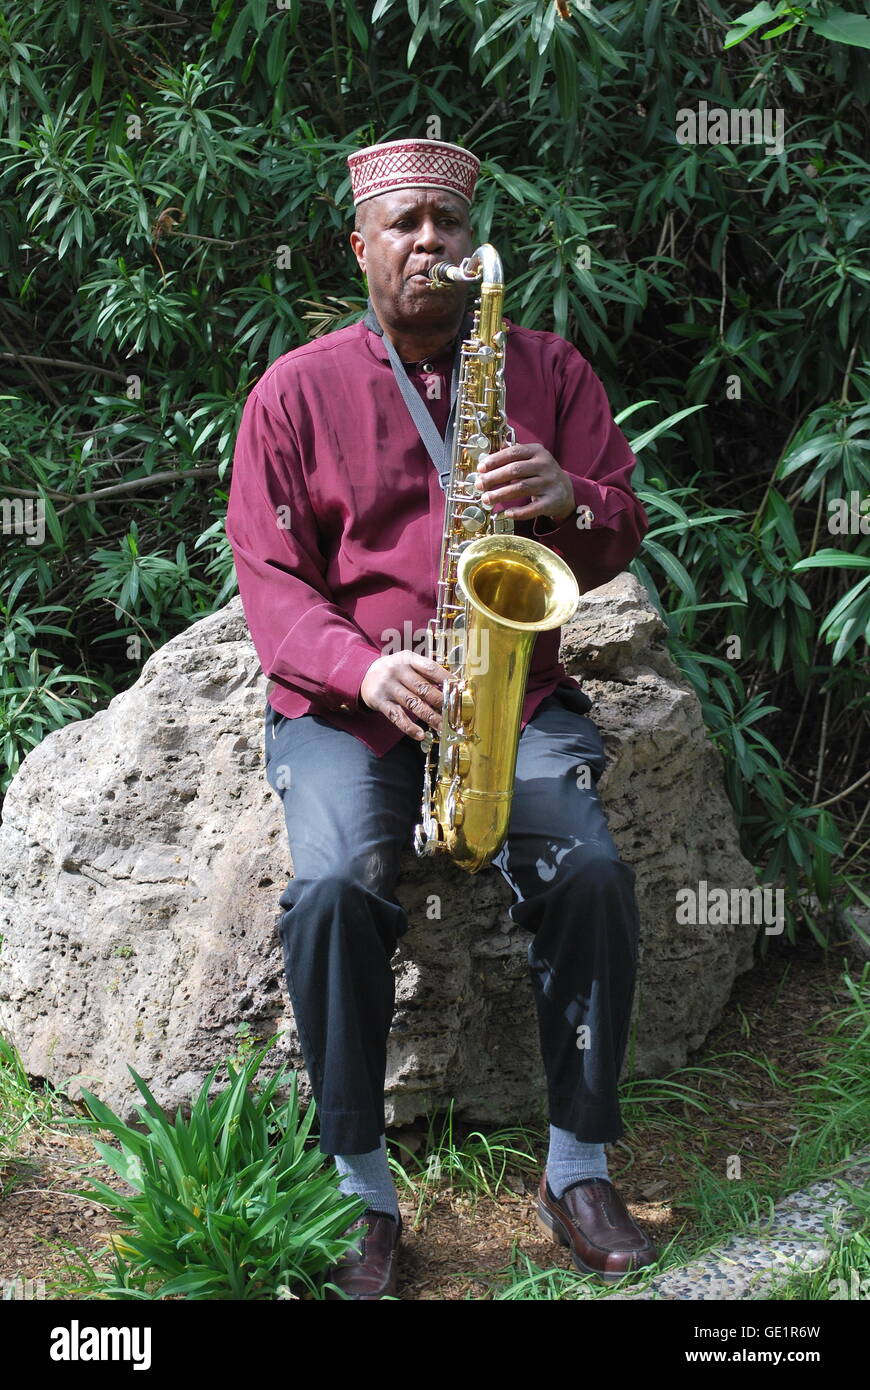 Jazz musician playing his saxophone. Stock Photo